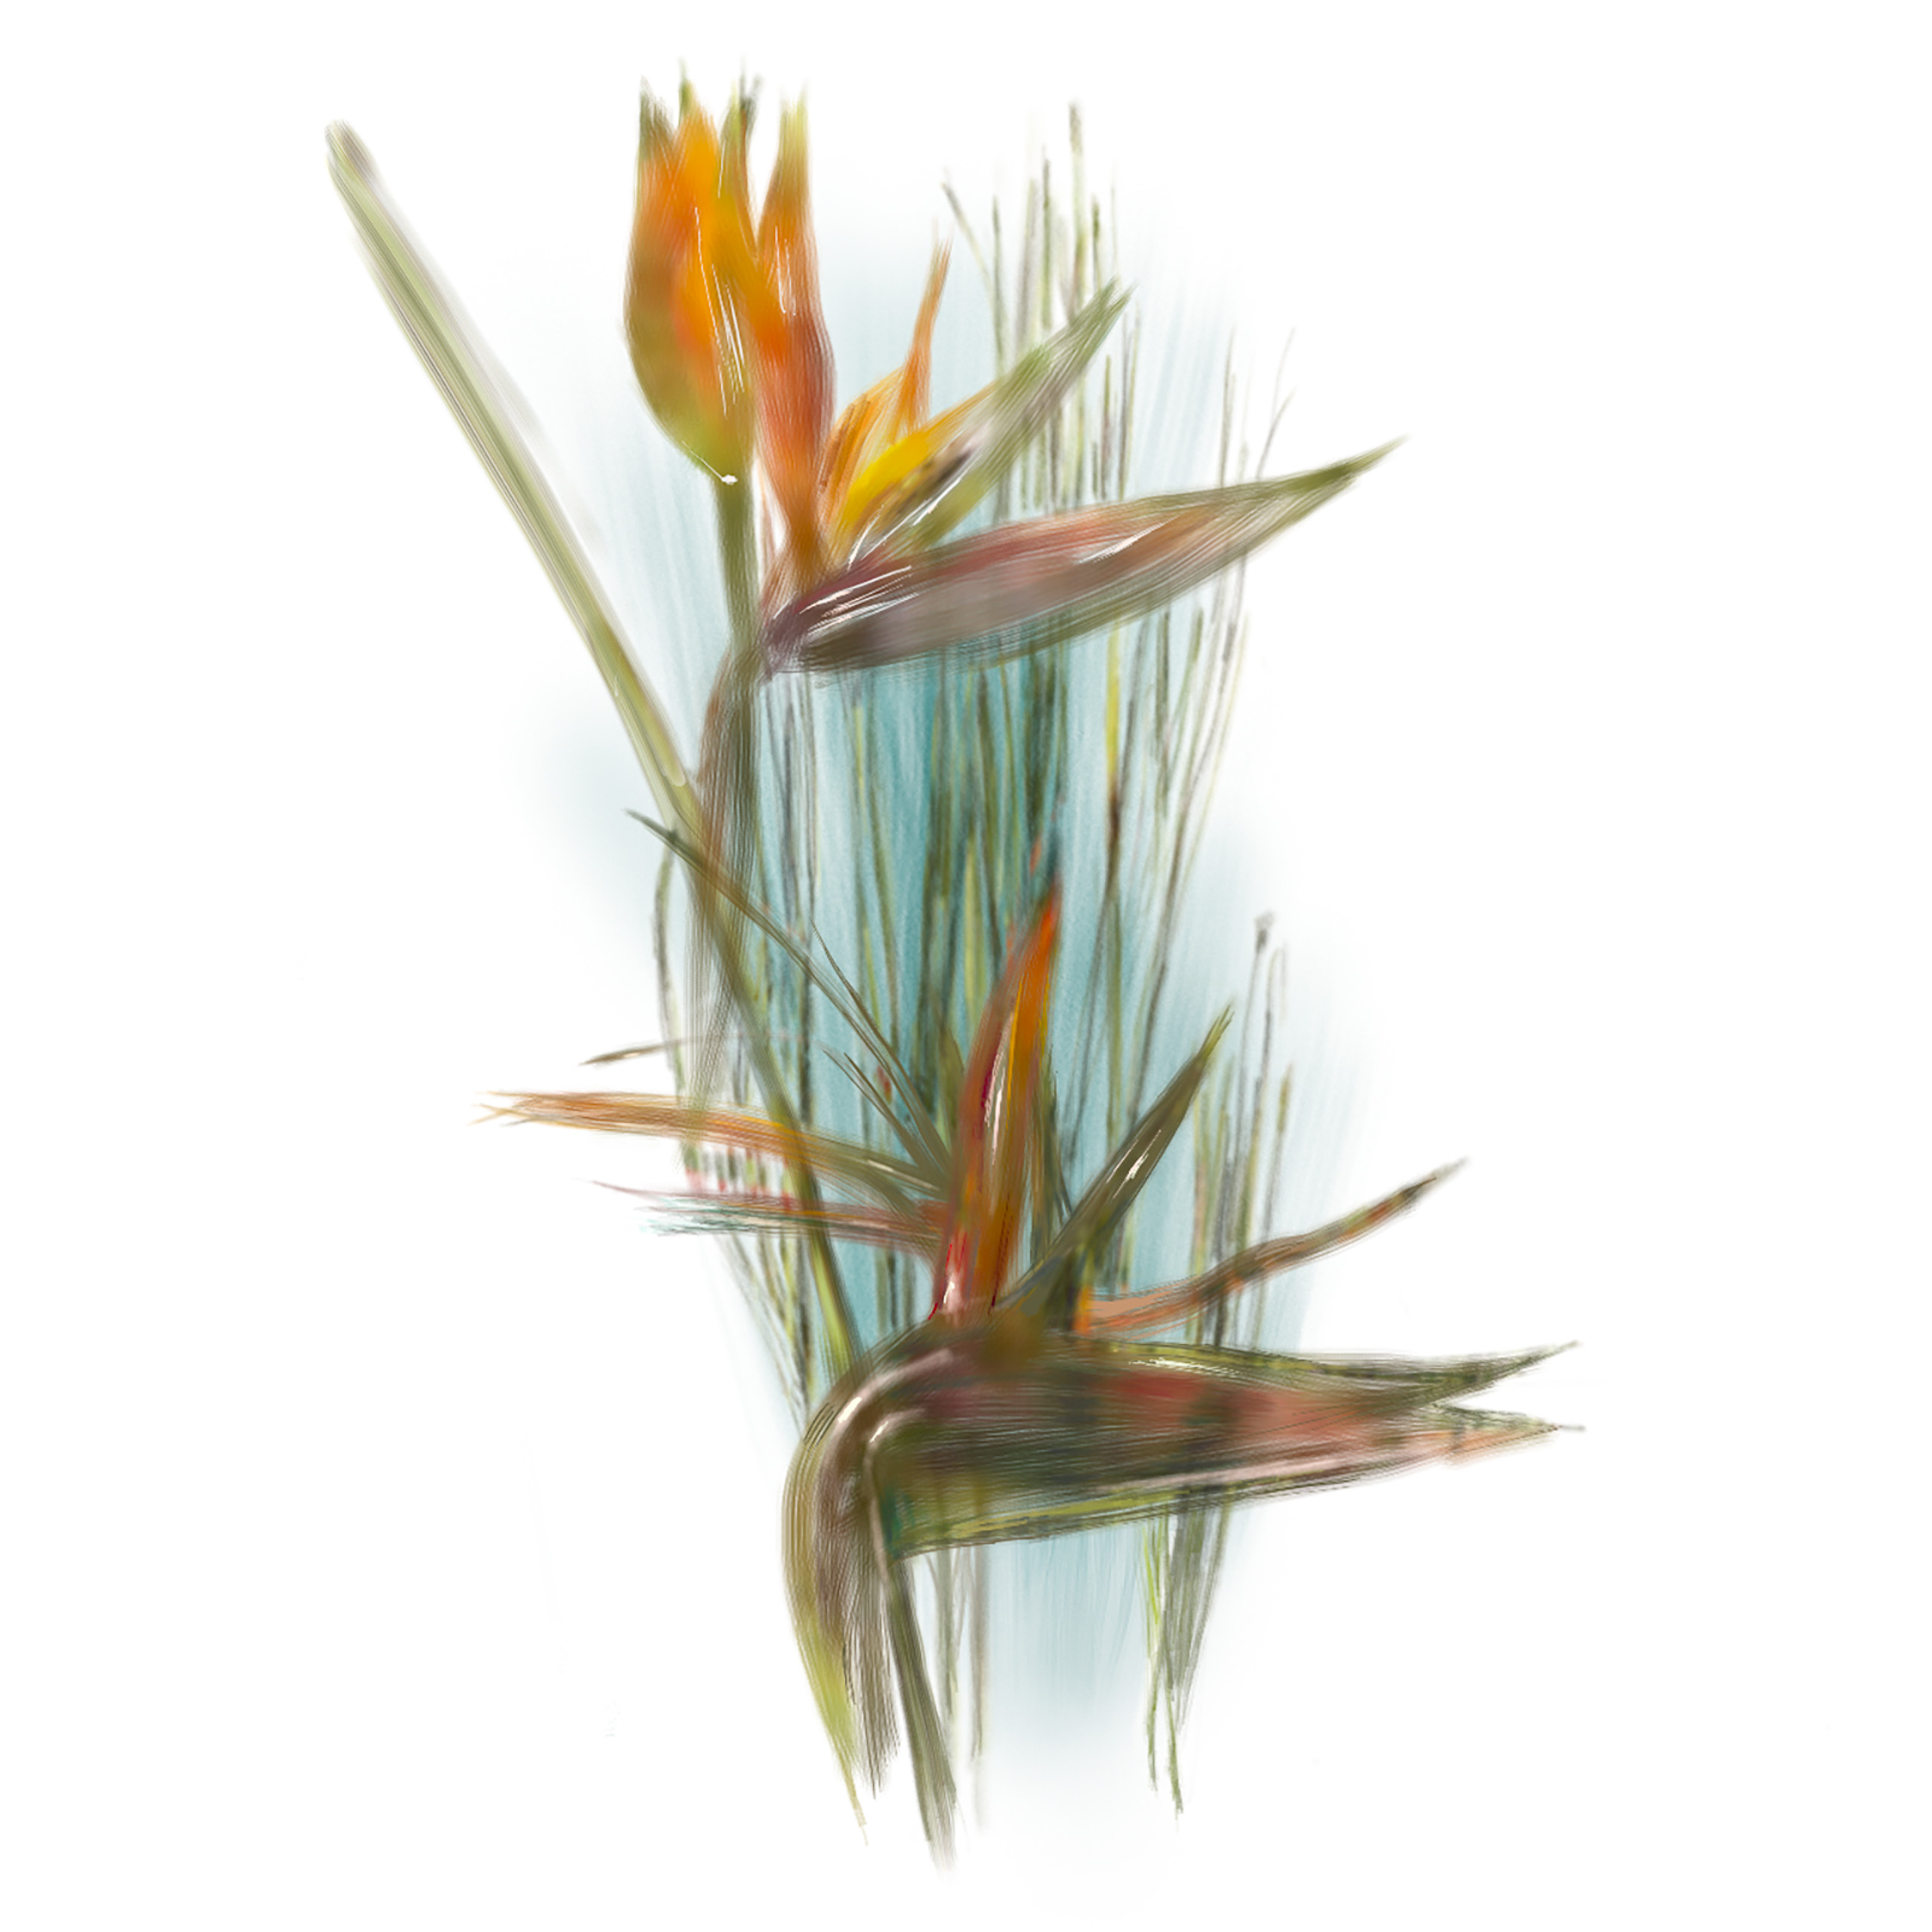 Birds of paradise among reeds